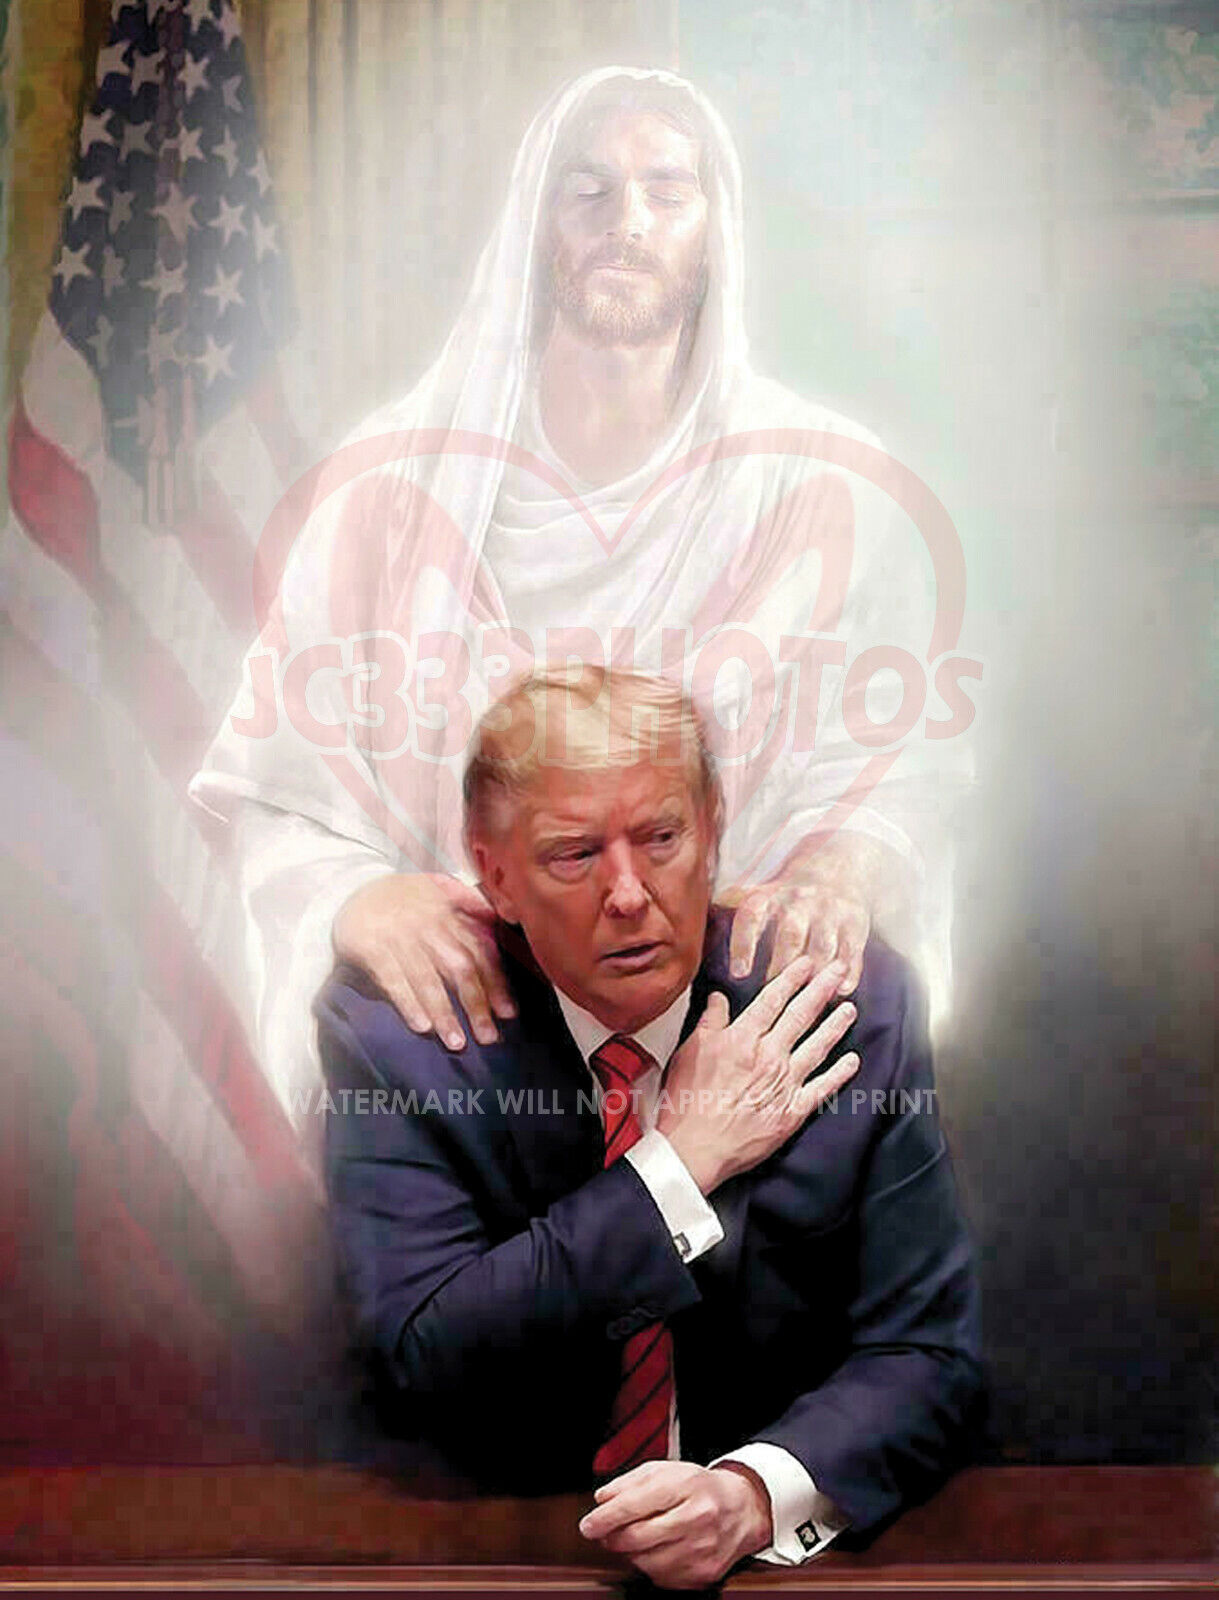 JESUS CHRIST PHOTO 8.5X11 PRAYING WITH PRESIDENT DONALD TRUMP MAGA REPRINT